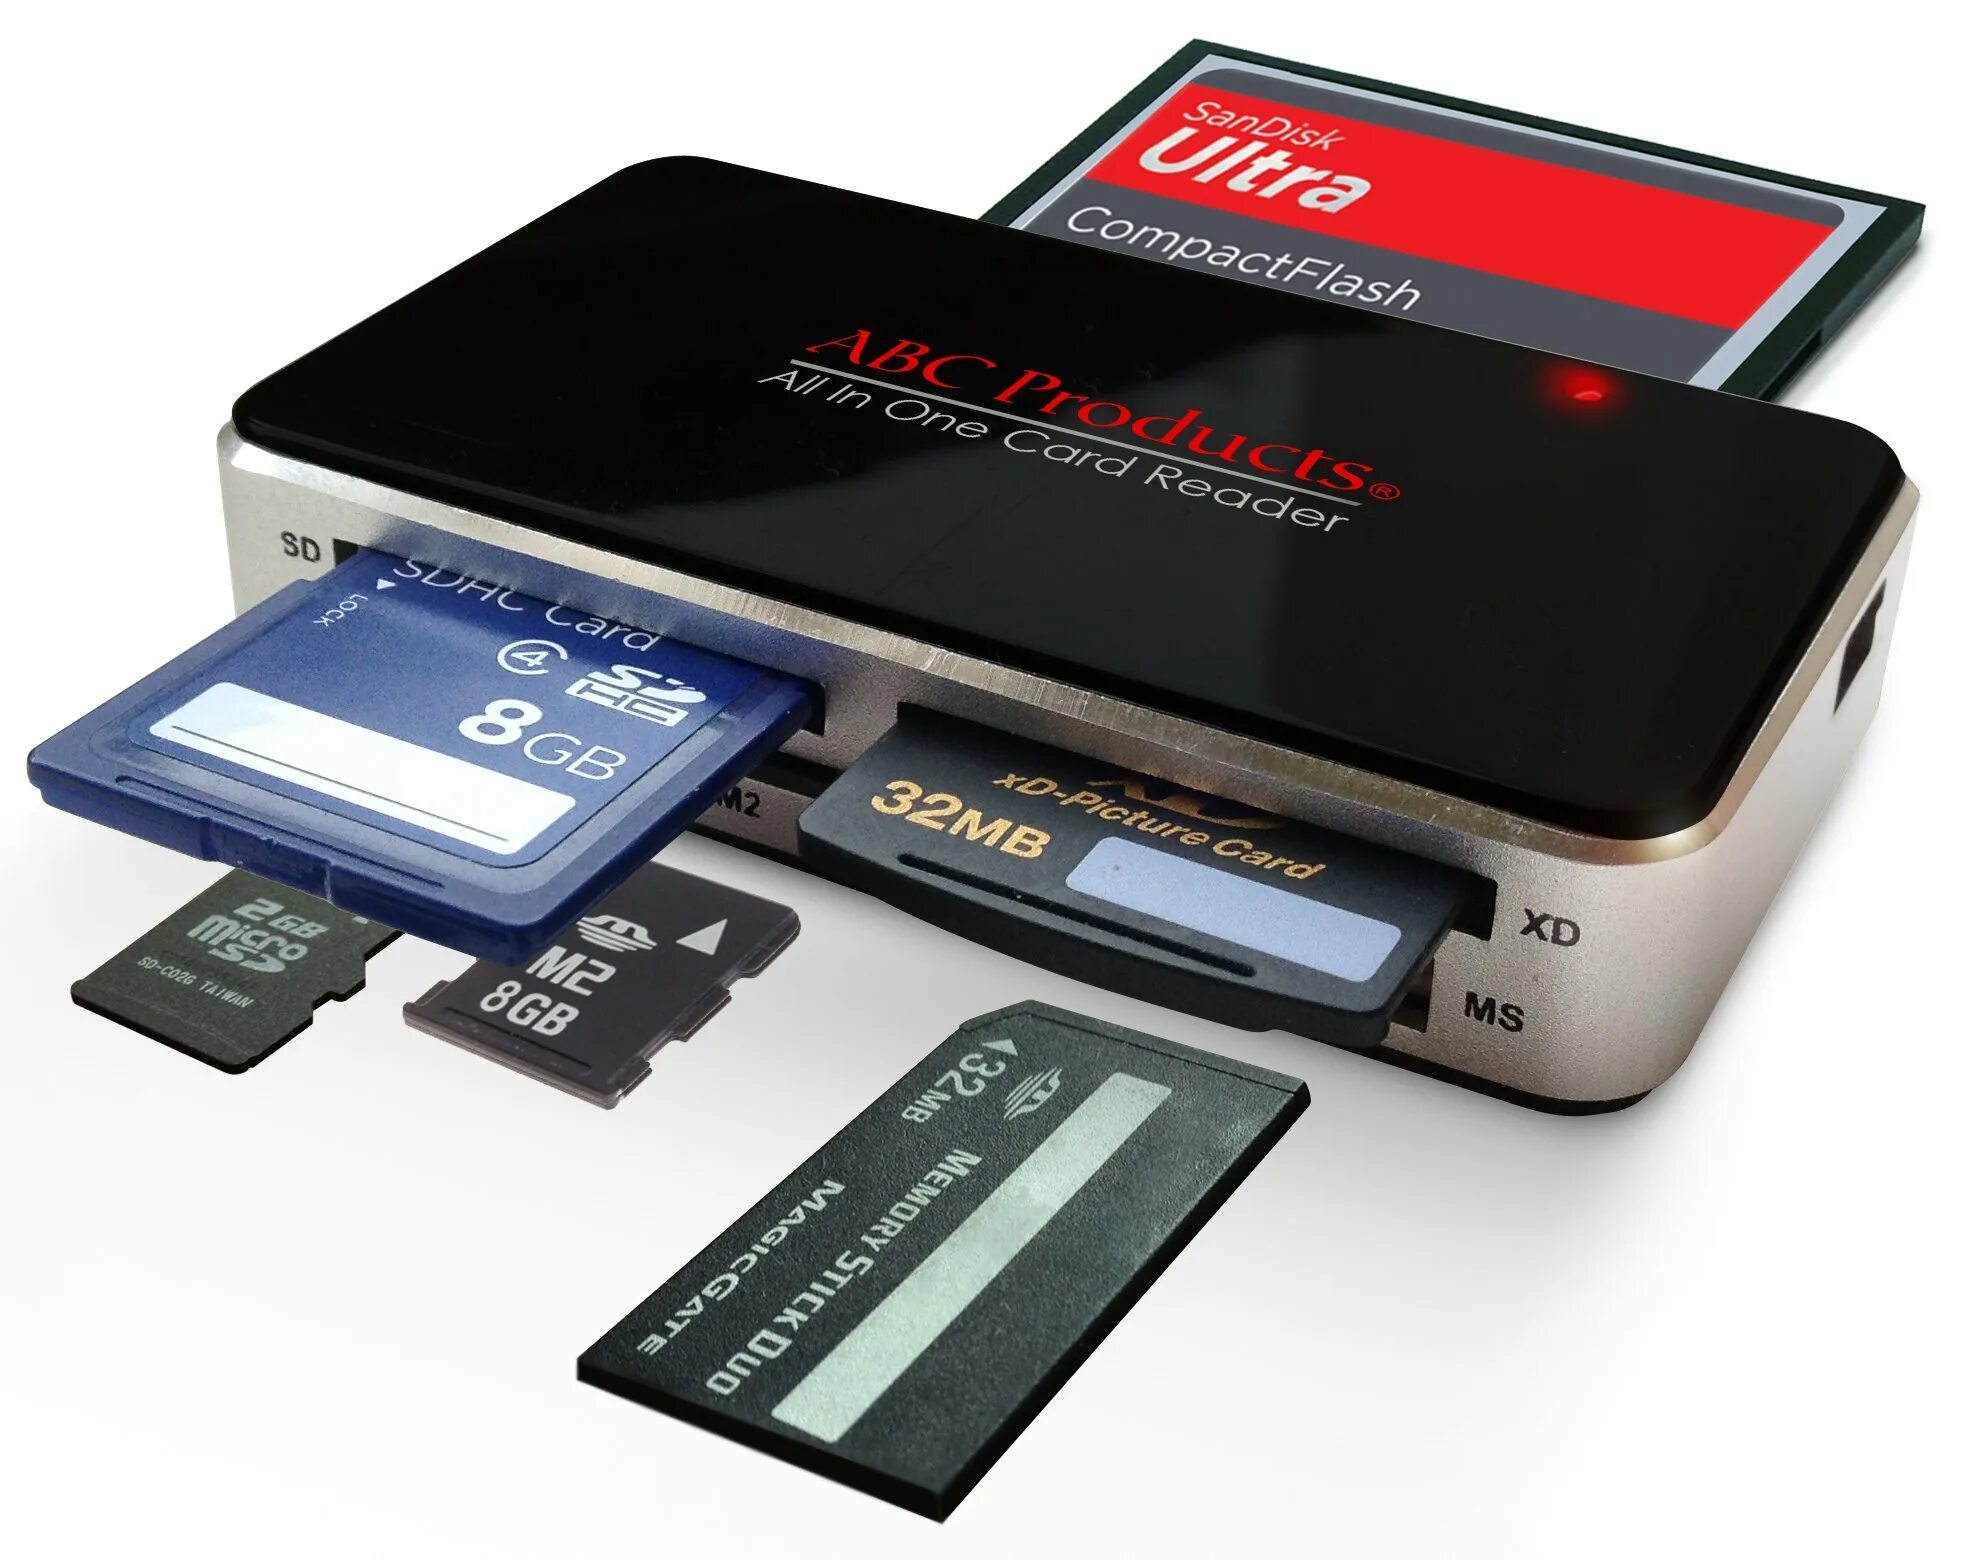 Карта памяти просмотр. Картридер SD, MMC, CF, MS, XD. Картридер USB (MICROSD SDHC TF m2 MMC MS Pro Duo). Картридер для SD карт Siemens. XD picture Card картридер.